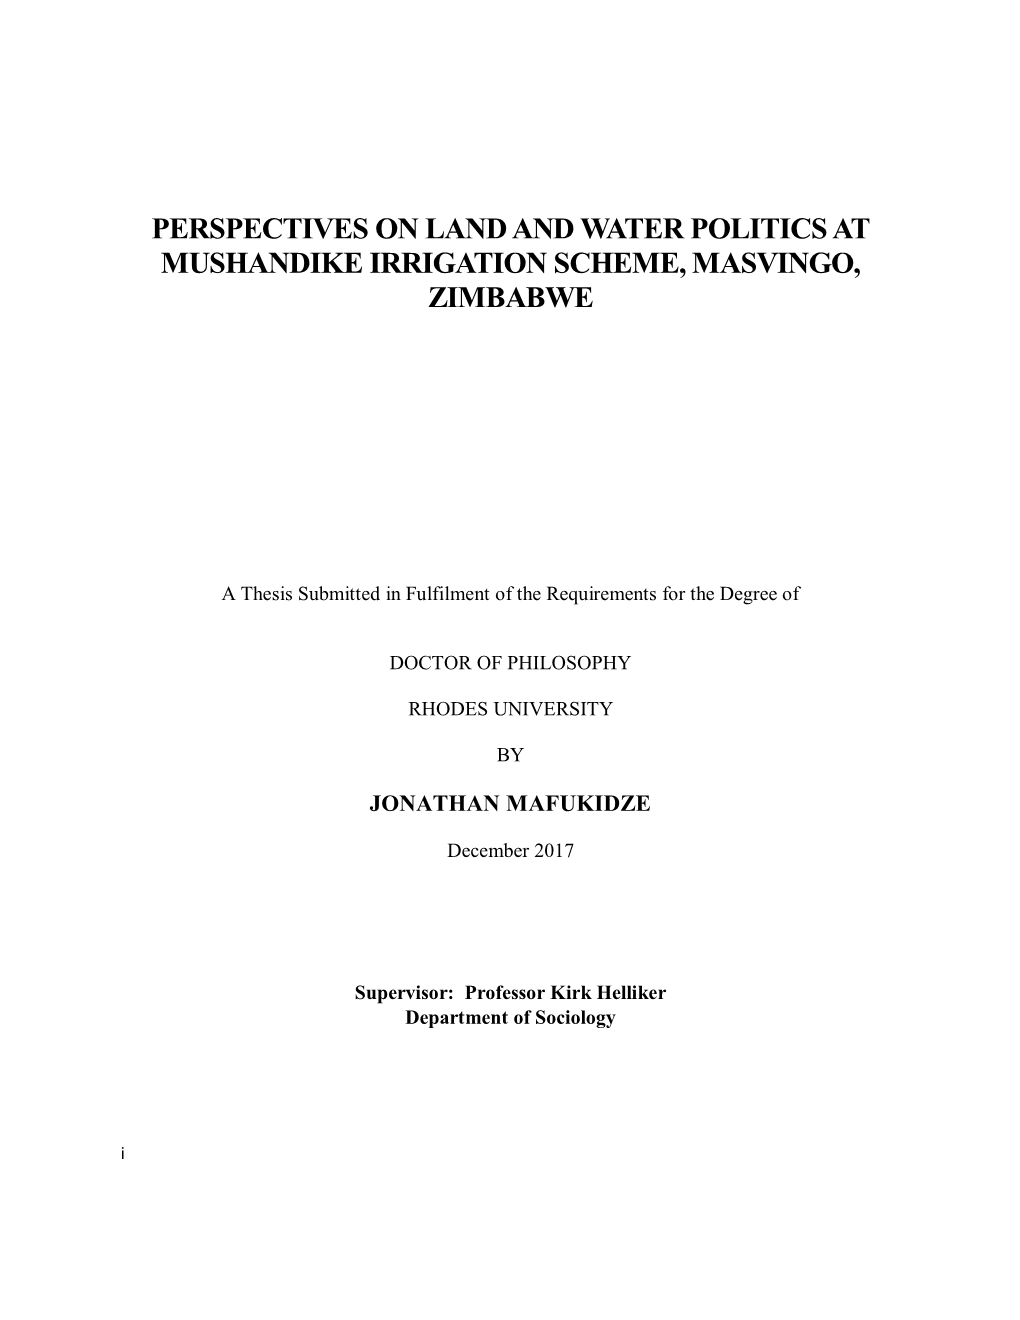 Perspectives on Land and Water Politics at Mushandike Irrigation Scheme, Masvingo, Zimbabwe